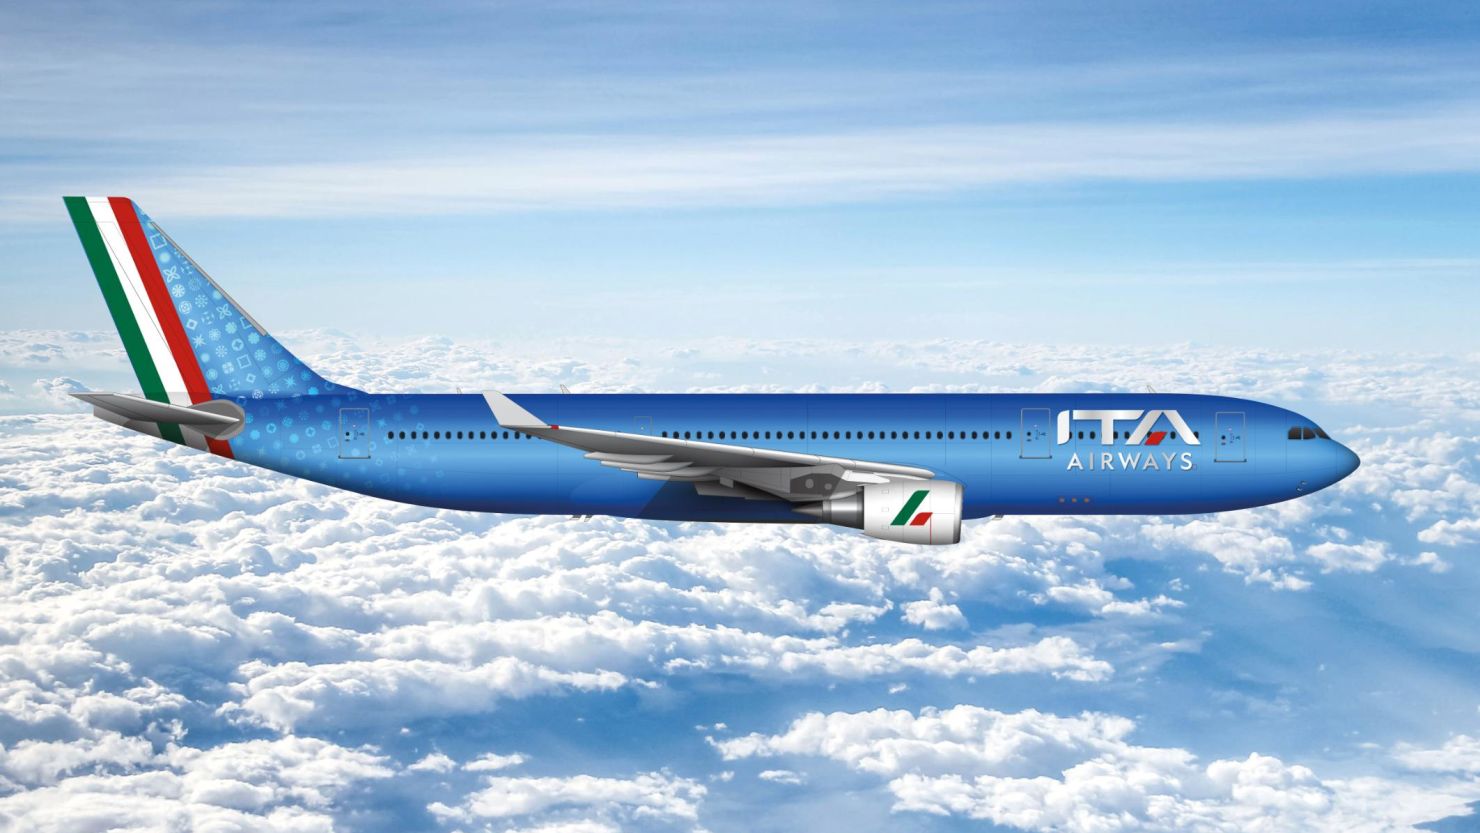 The new ITA Airways livery takes inspiration from Italy's 'azzuri.'